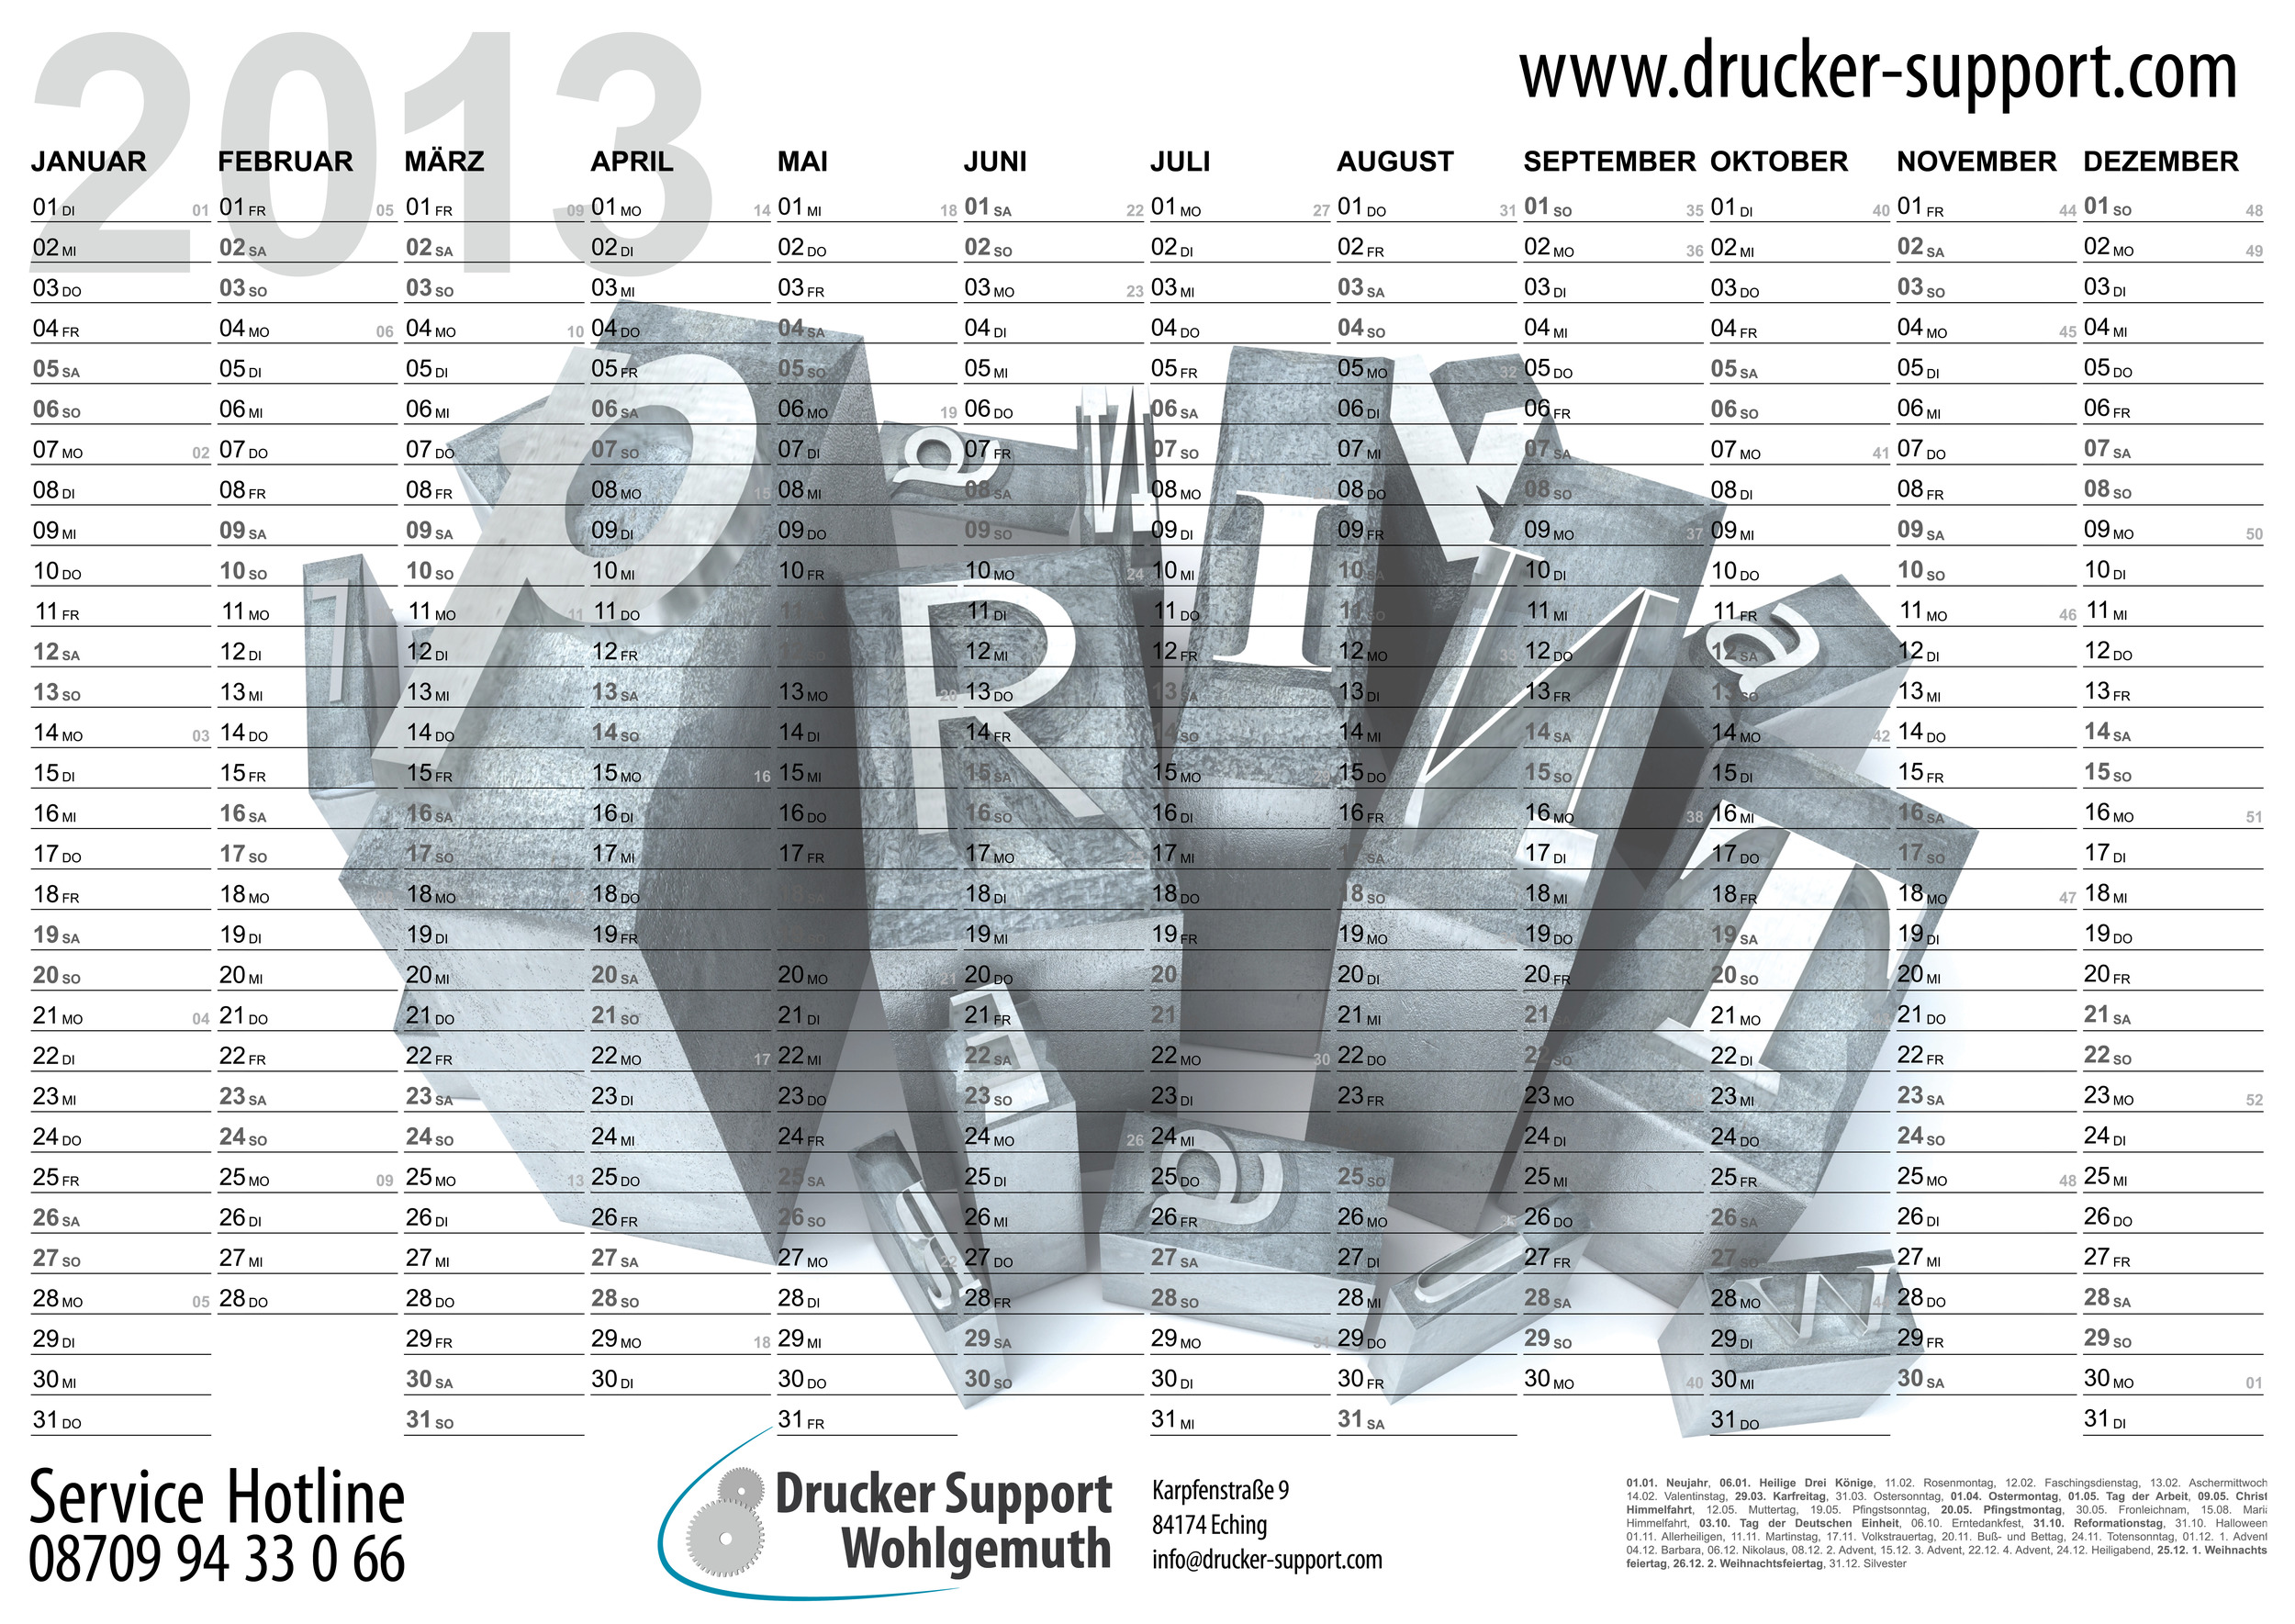 Drucker Support Wohlgemuth Kalender 2013.jpg